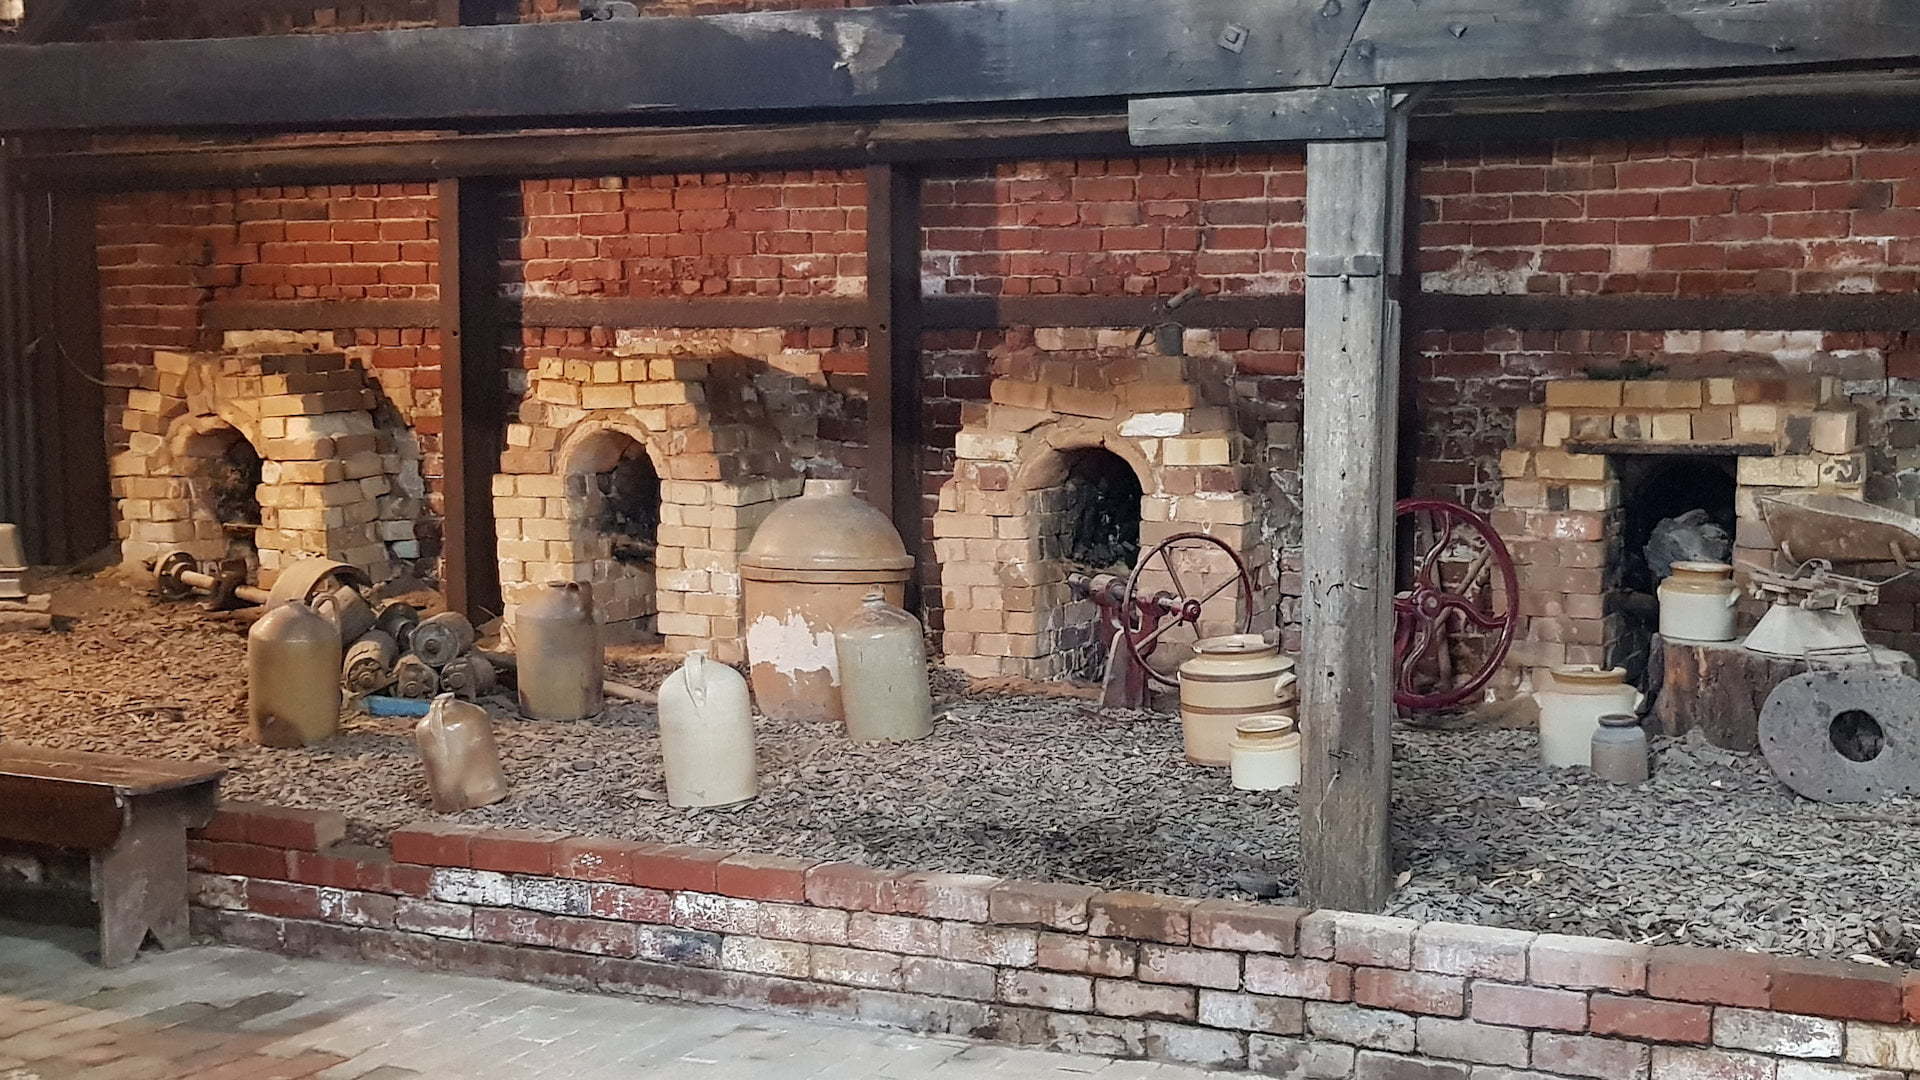 Bendigo Pottery is Australia's oldest working pottery, established in 1858